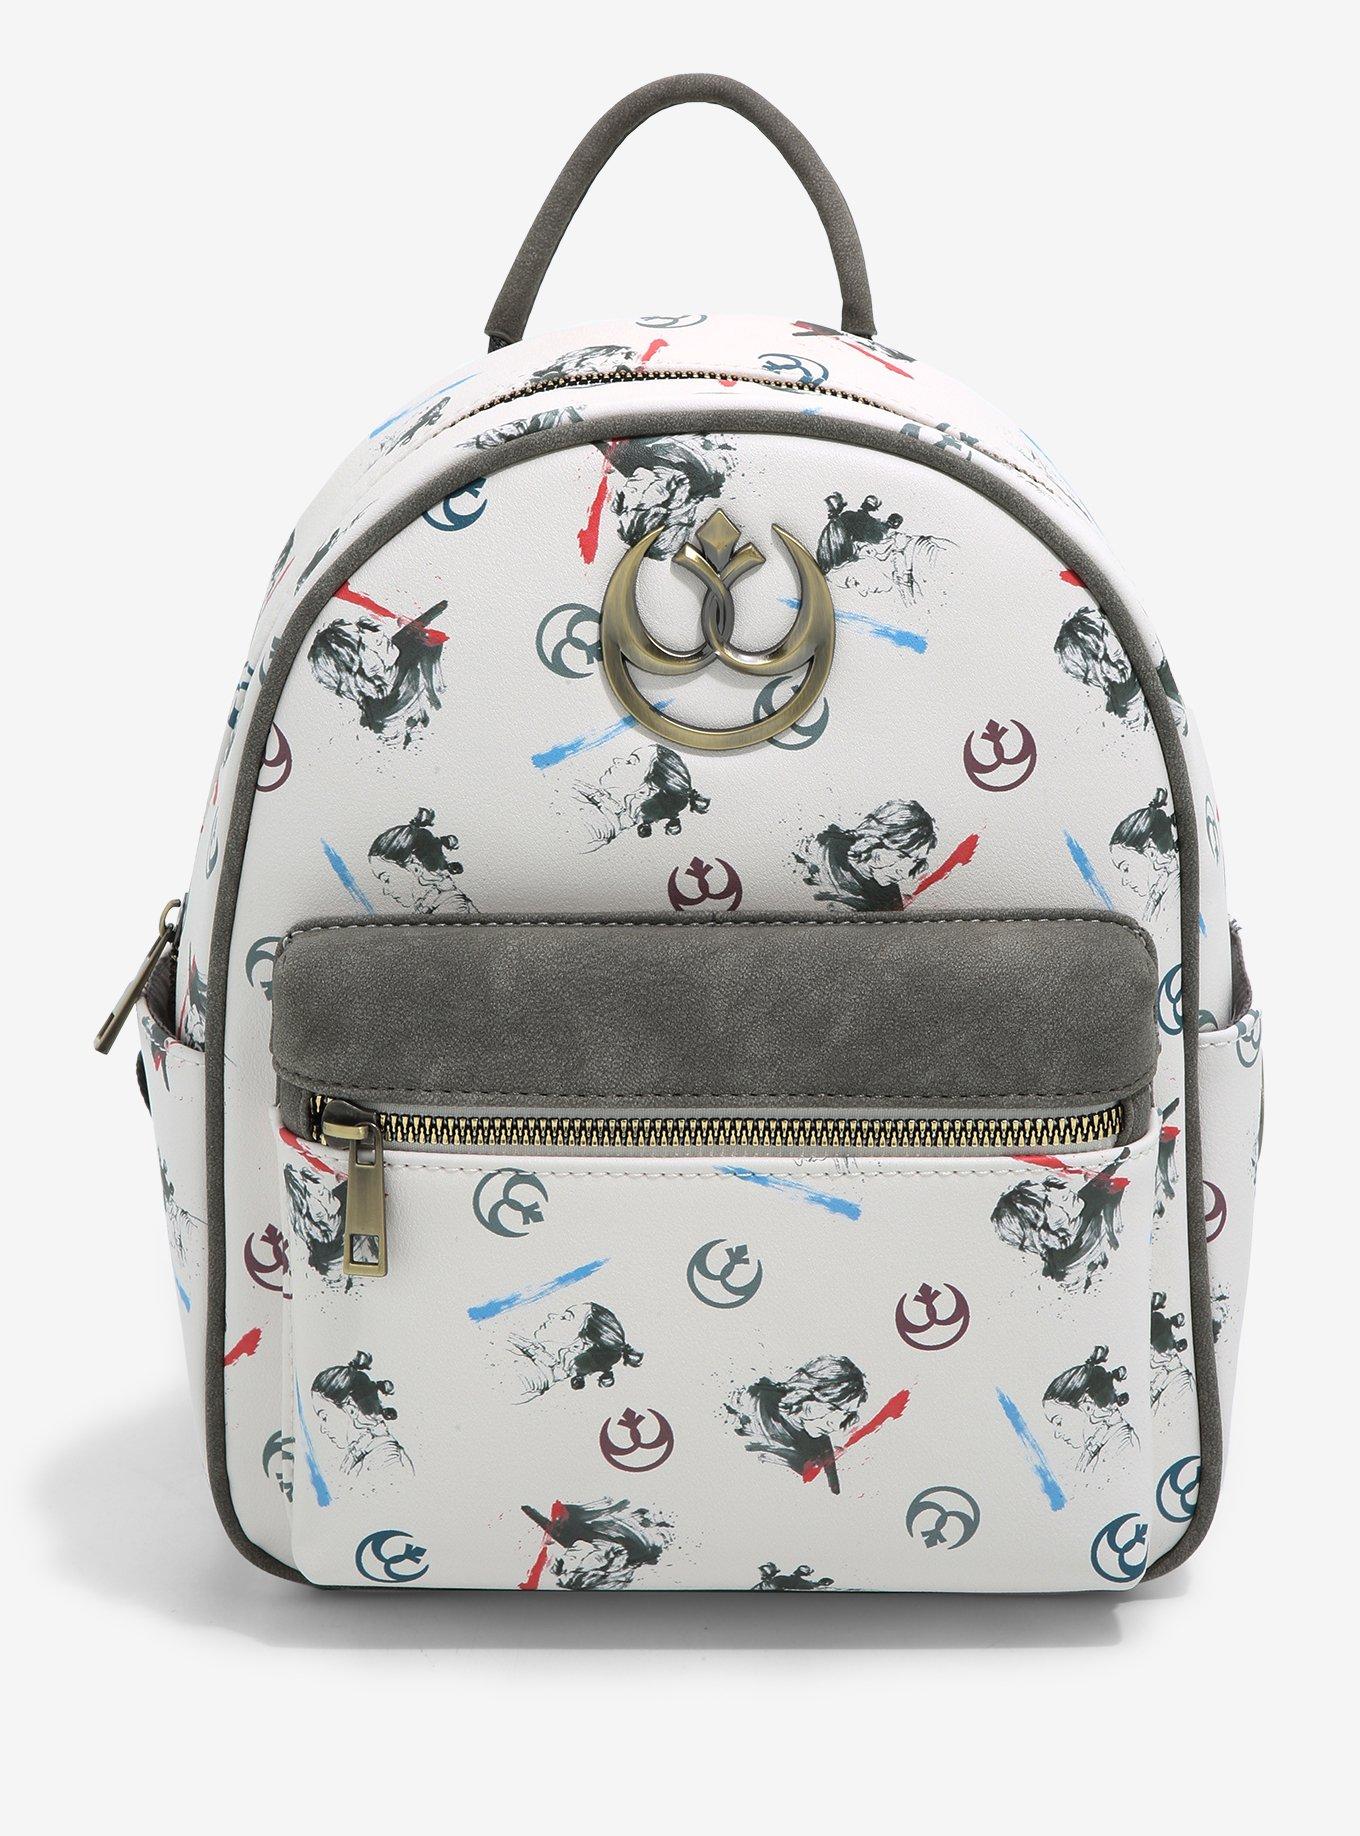 Star Wars Princess Leia Convertible Mini Backpack & Crossbody Bag